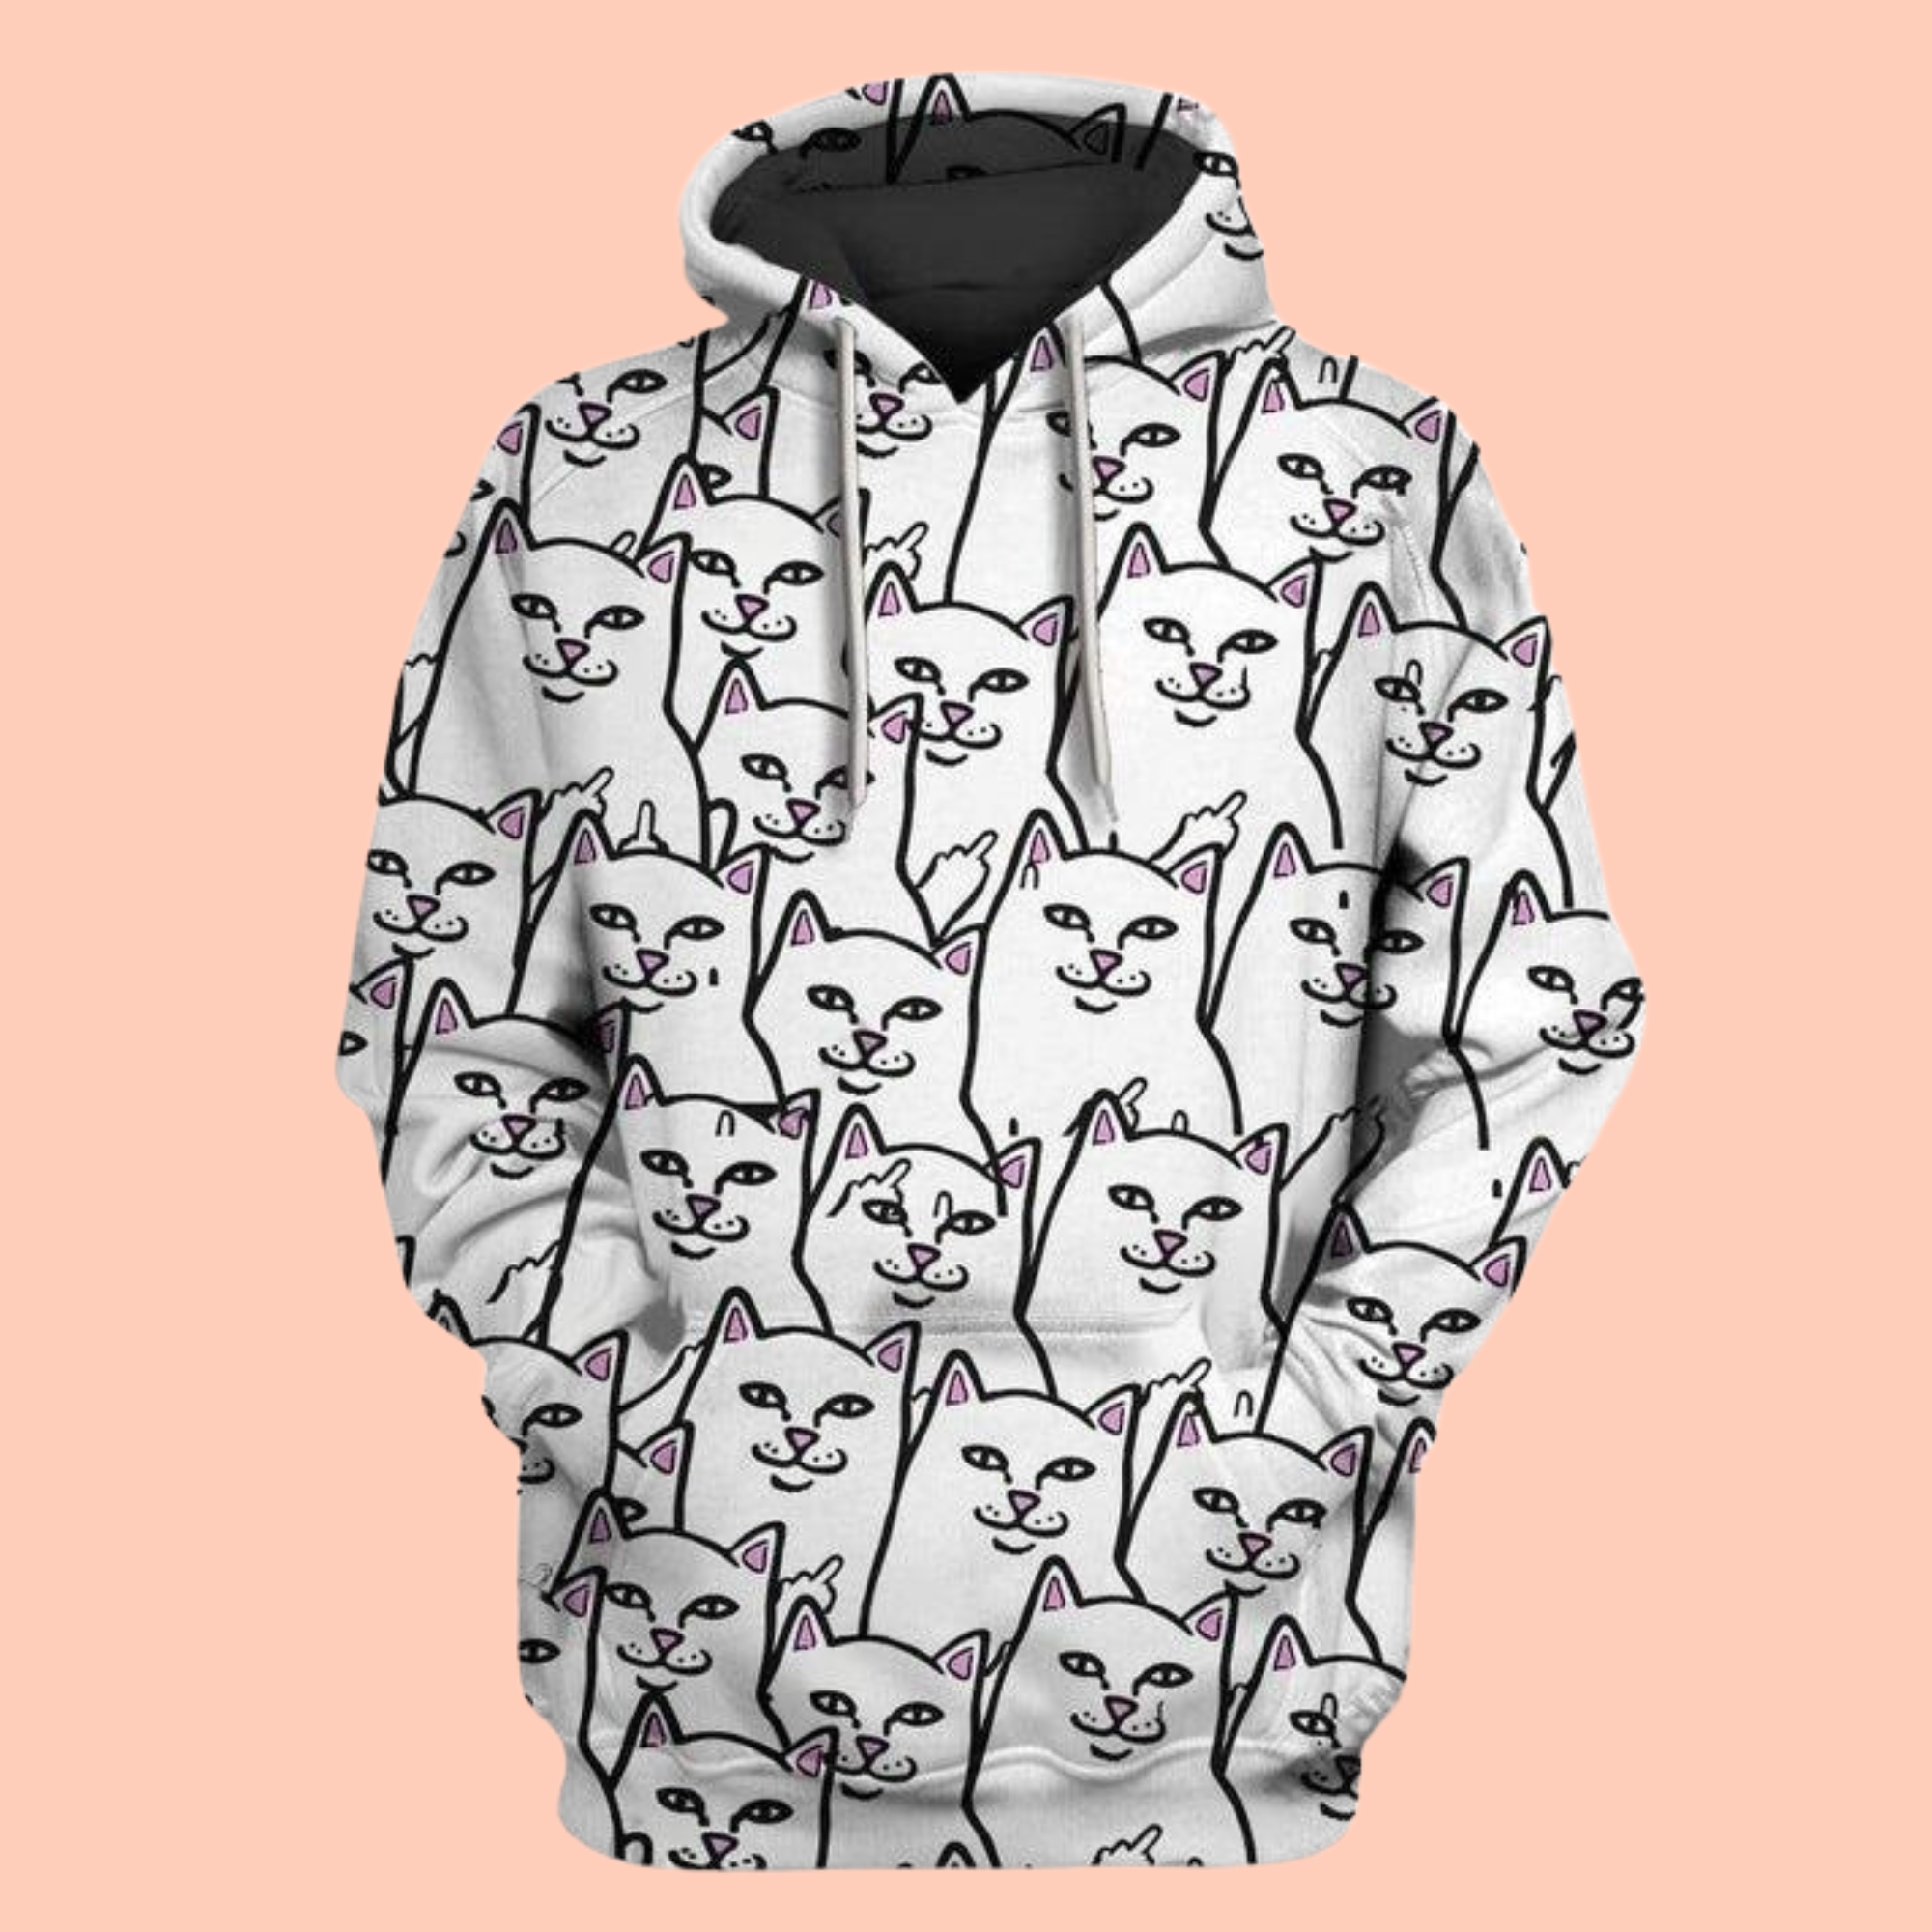 Naughty Cat 3D Cat T-Shirt / Hoodie / Sweatshirt / Zipper Hoodie - Gift For Cat's Lovers